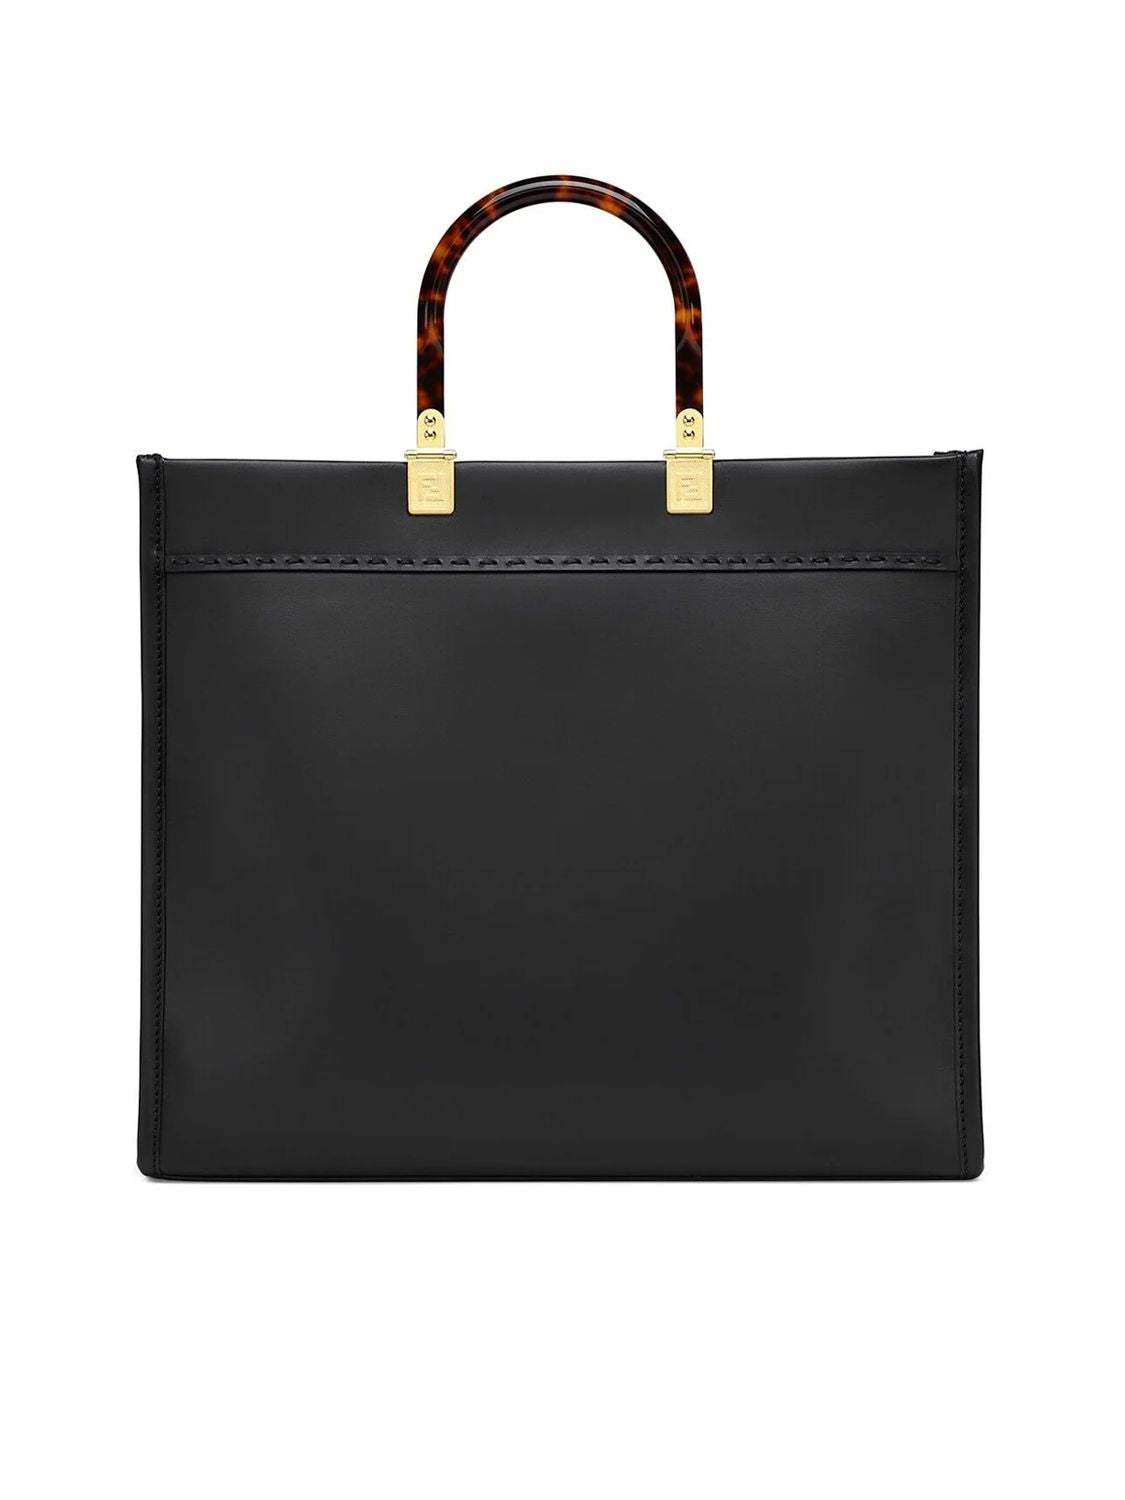 FENDI Feminine Black Leather Top-Handle Tote Bag for Women